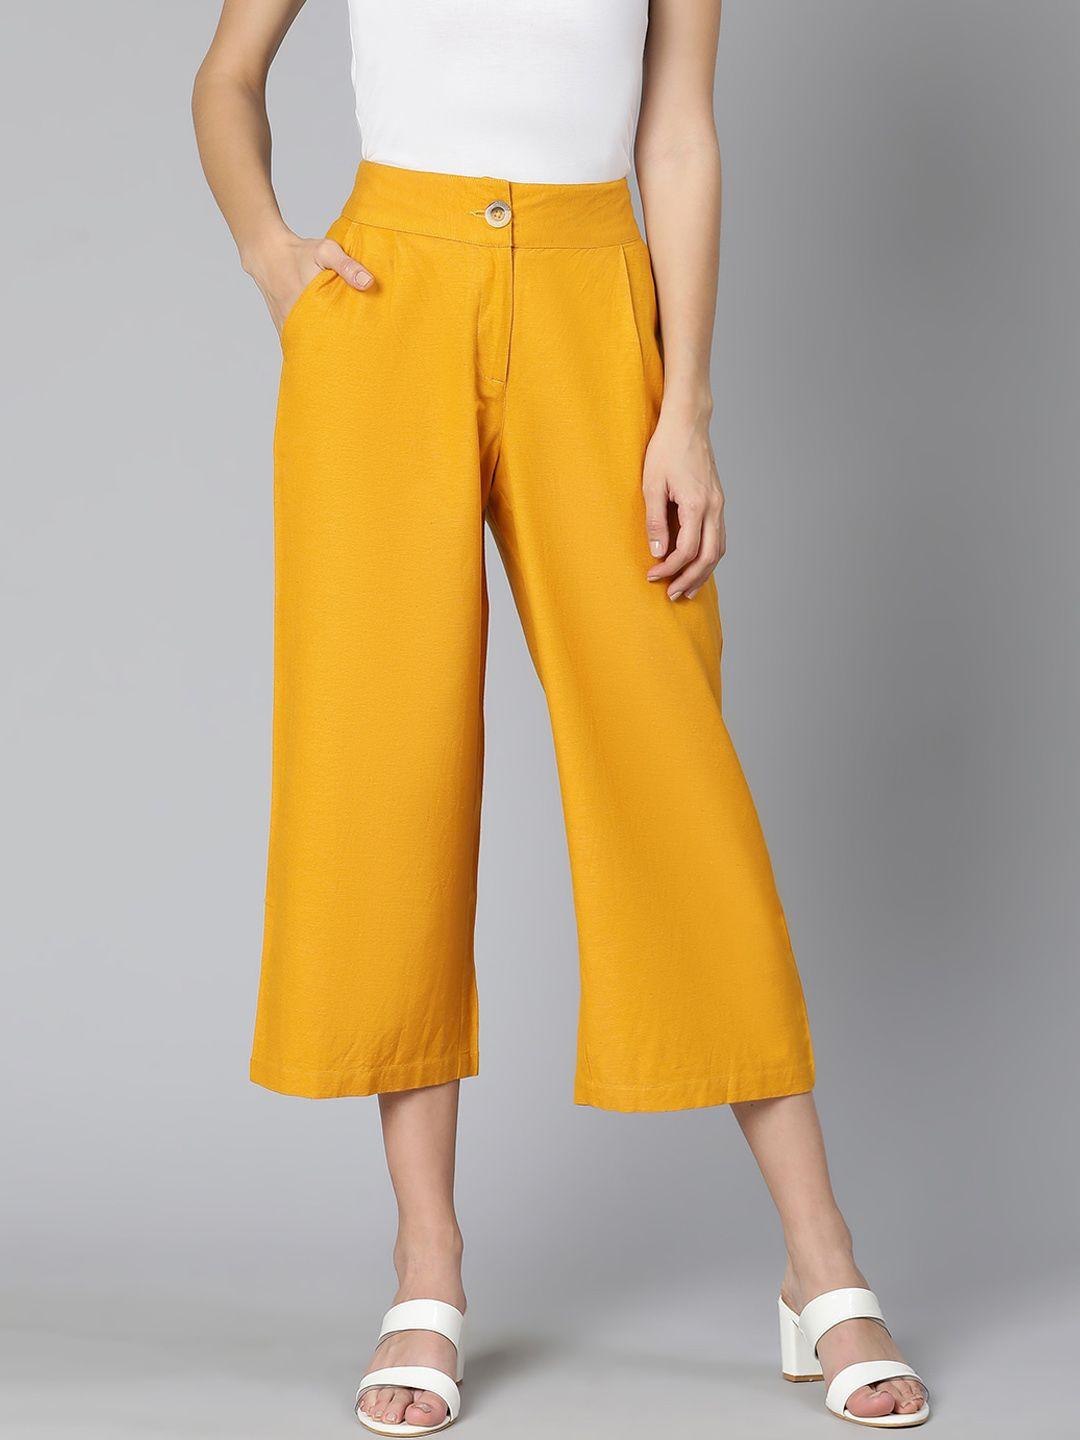 oxolloxo women mustard yellow culottes trousers